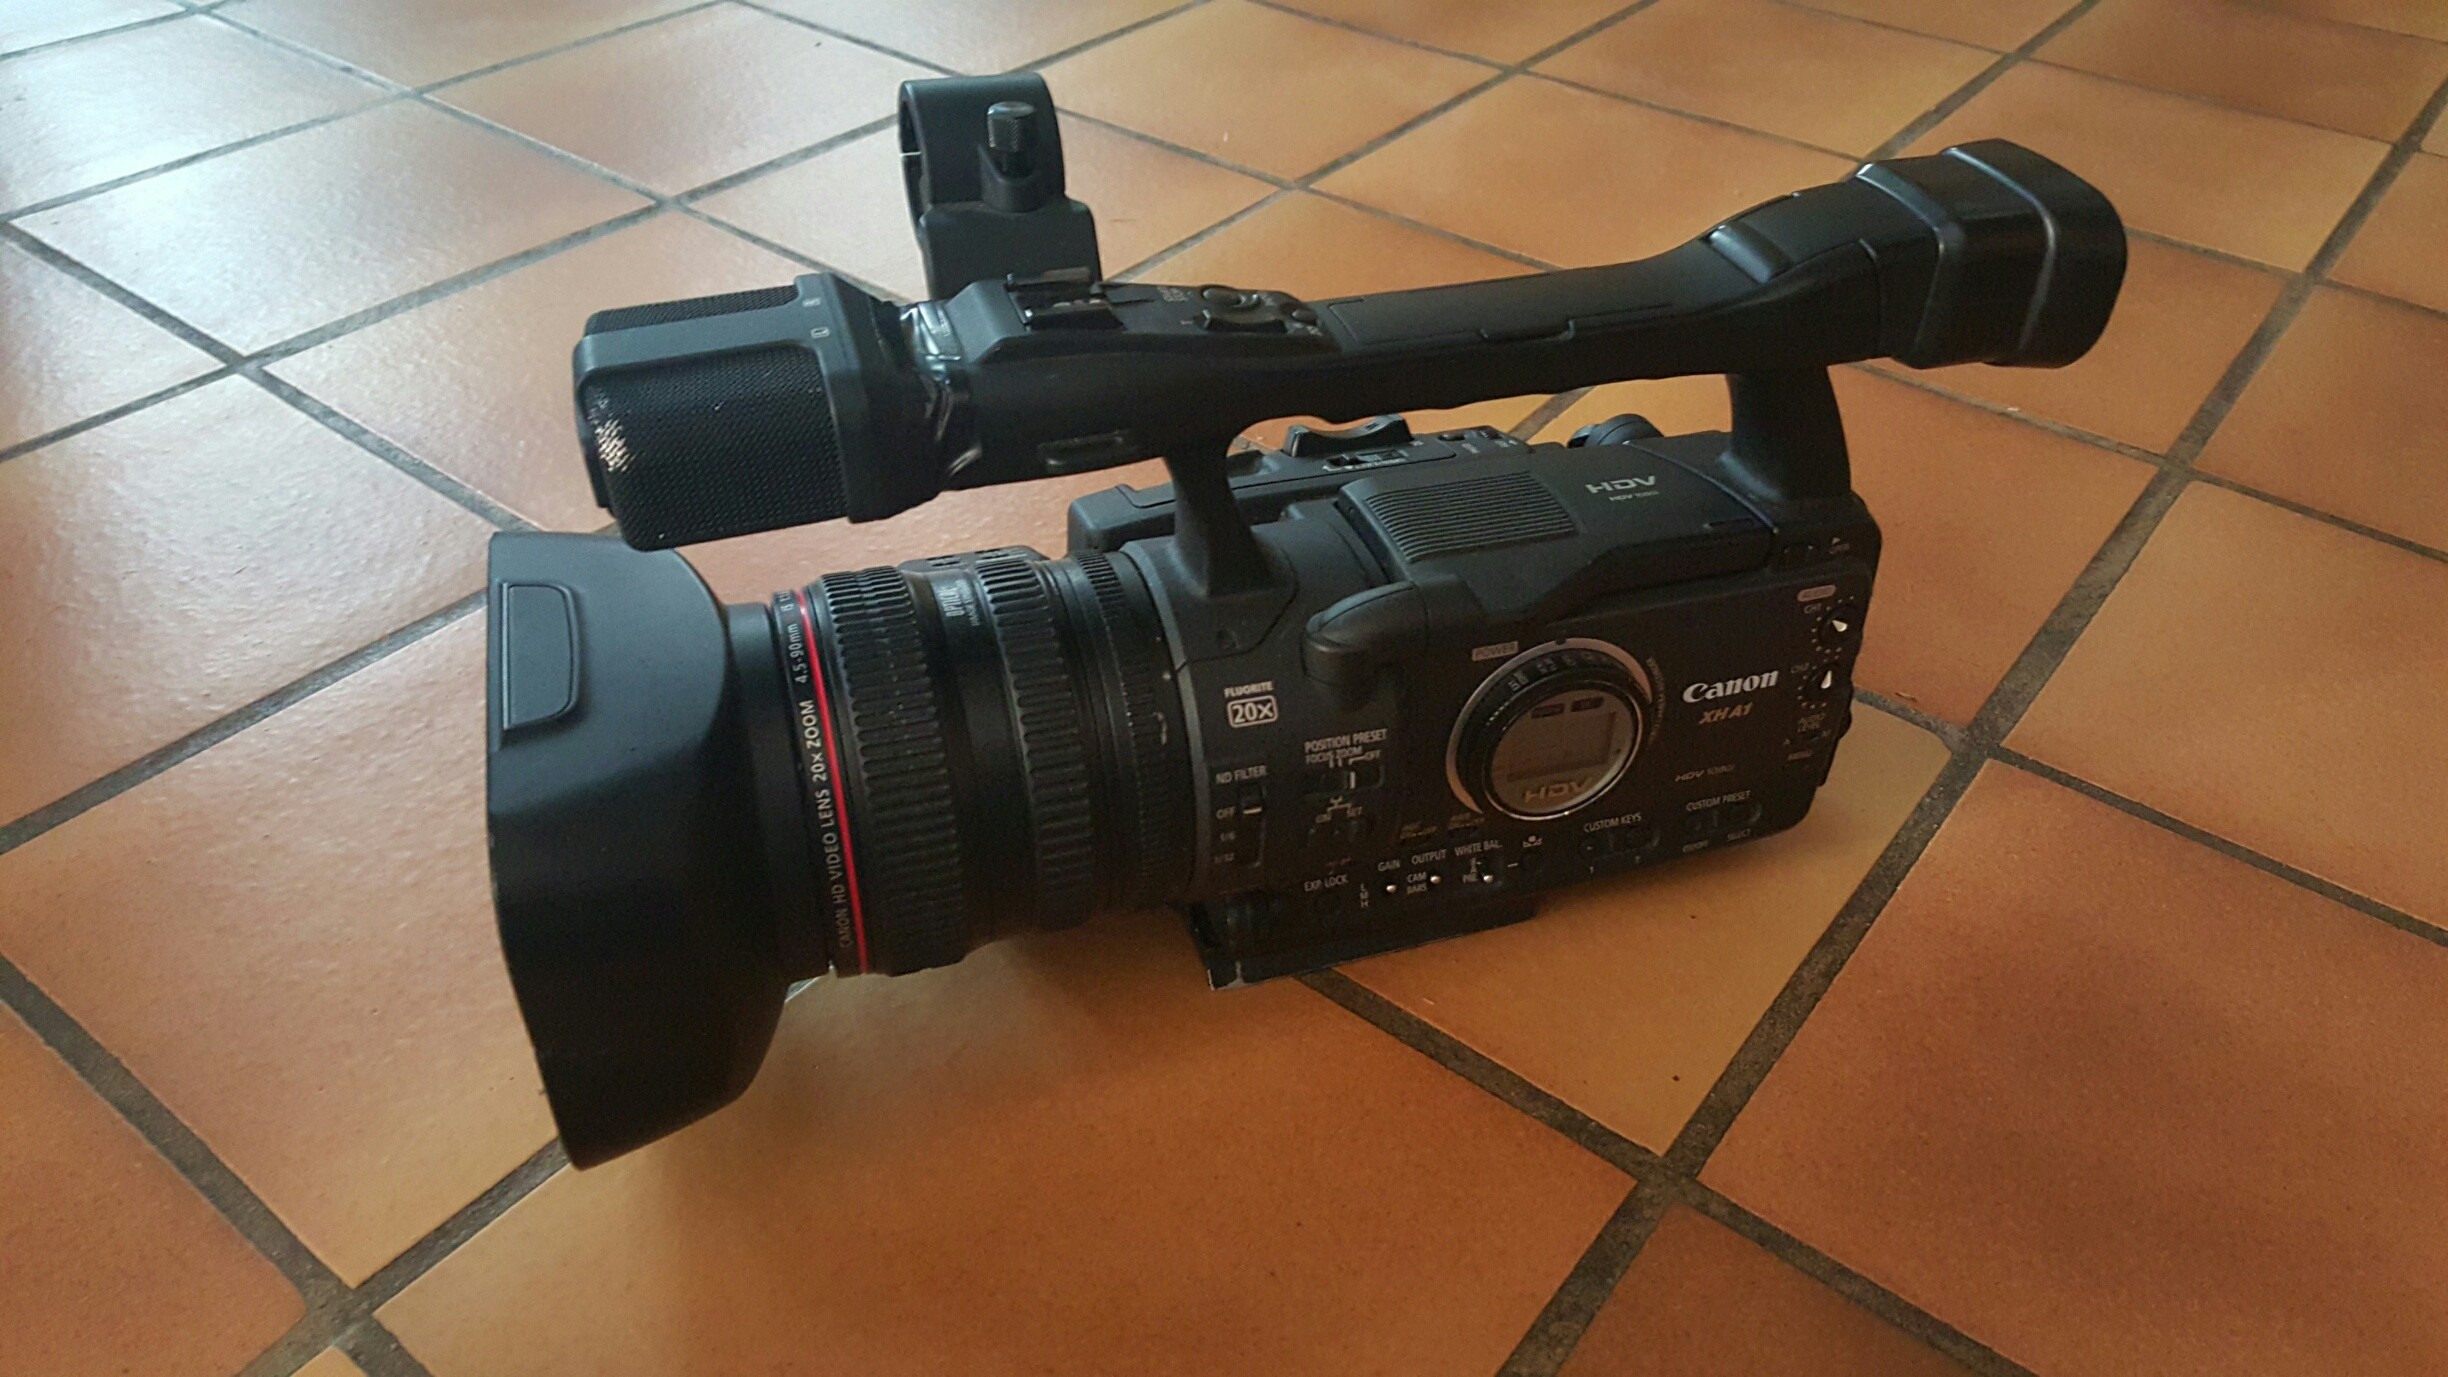 Annonce occasions - Vends Caméra HDV Canon XHA1 - Le Repaire - Le Repaire